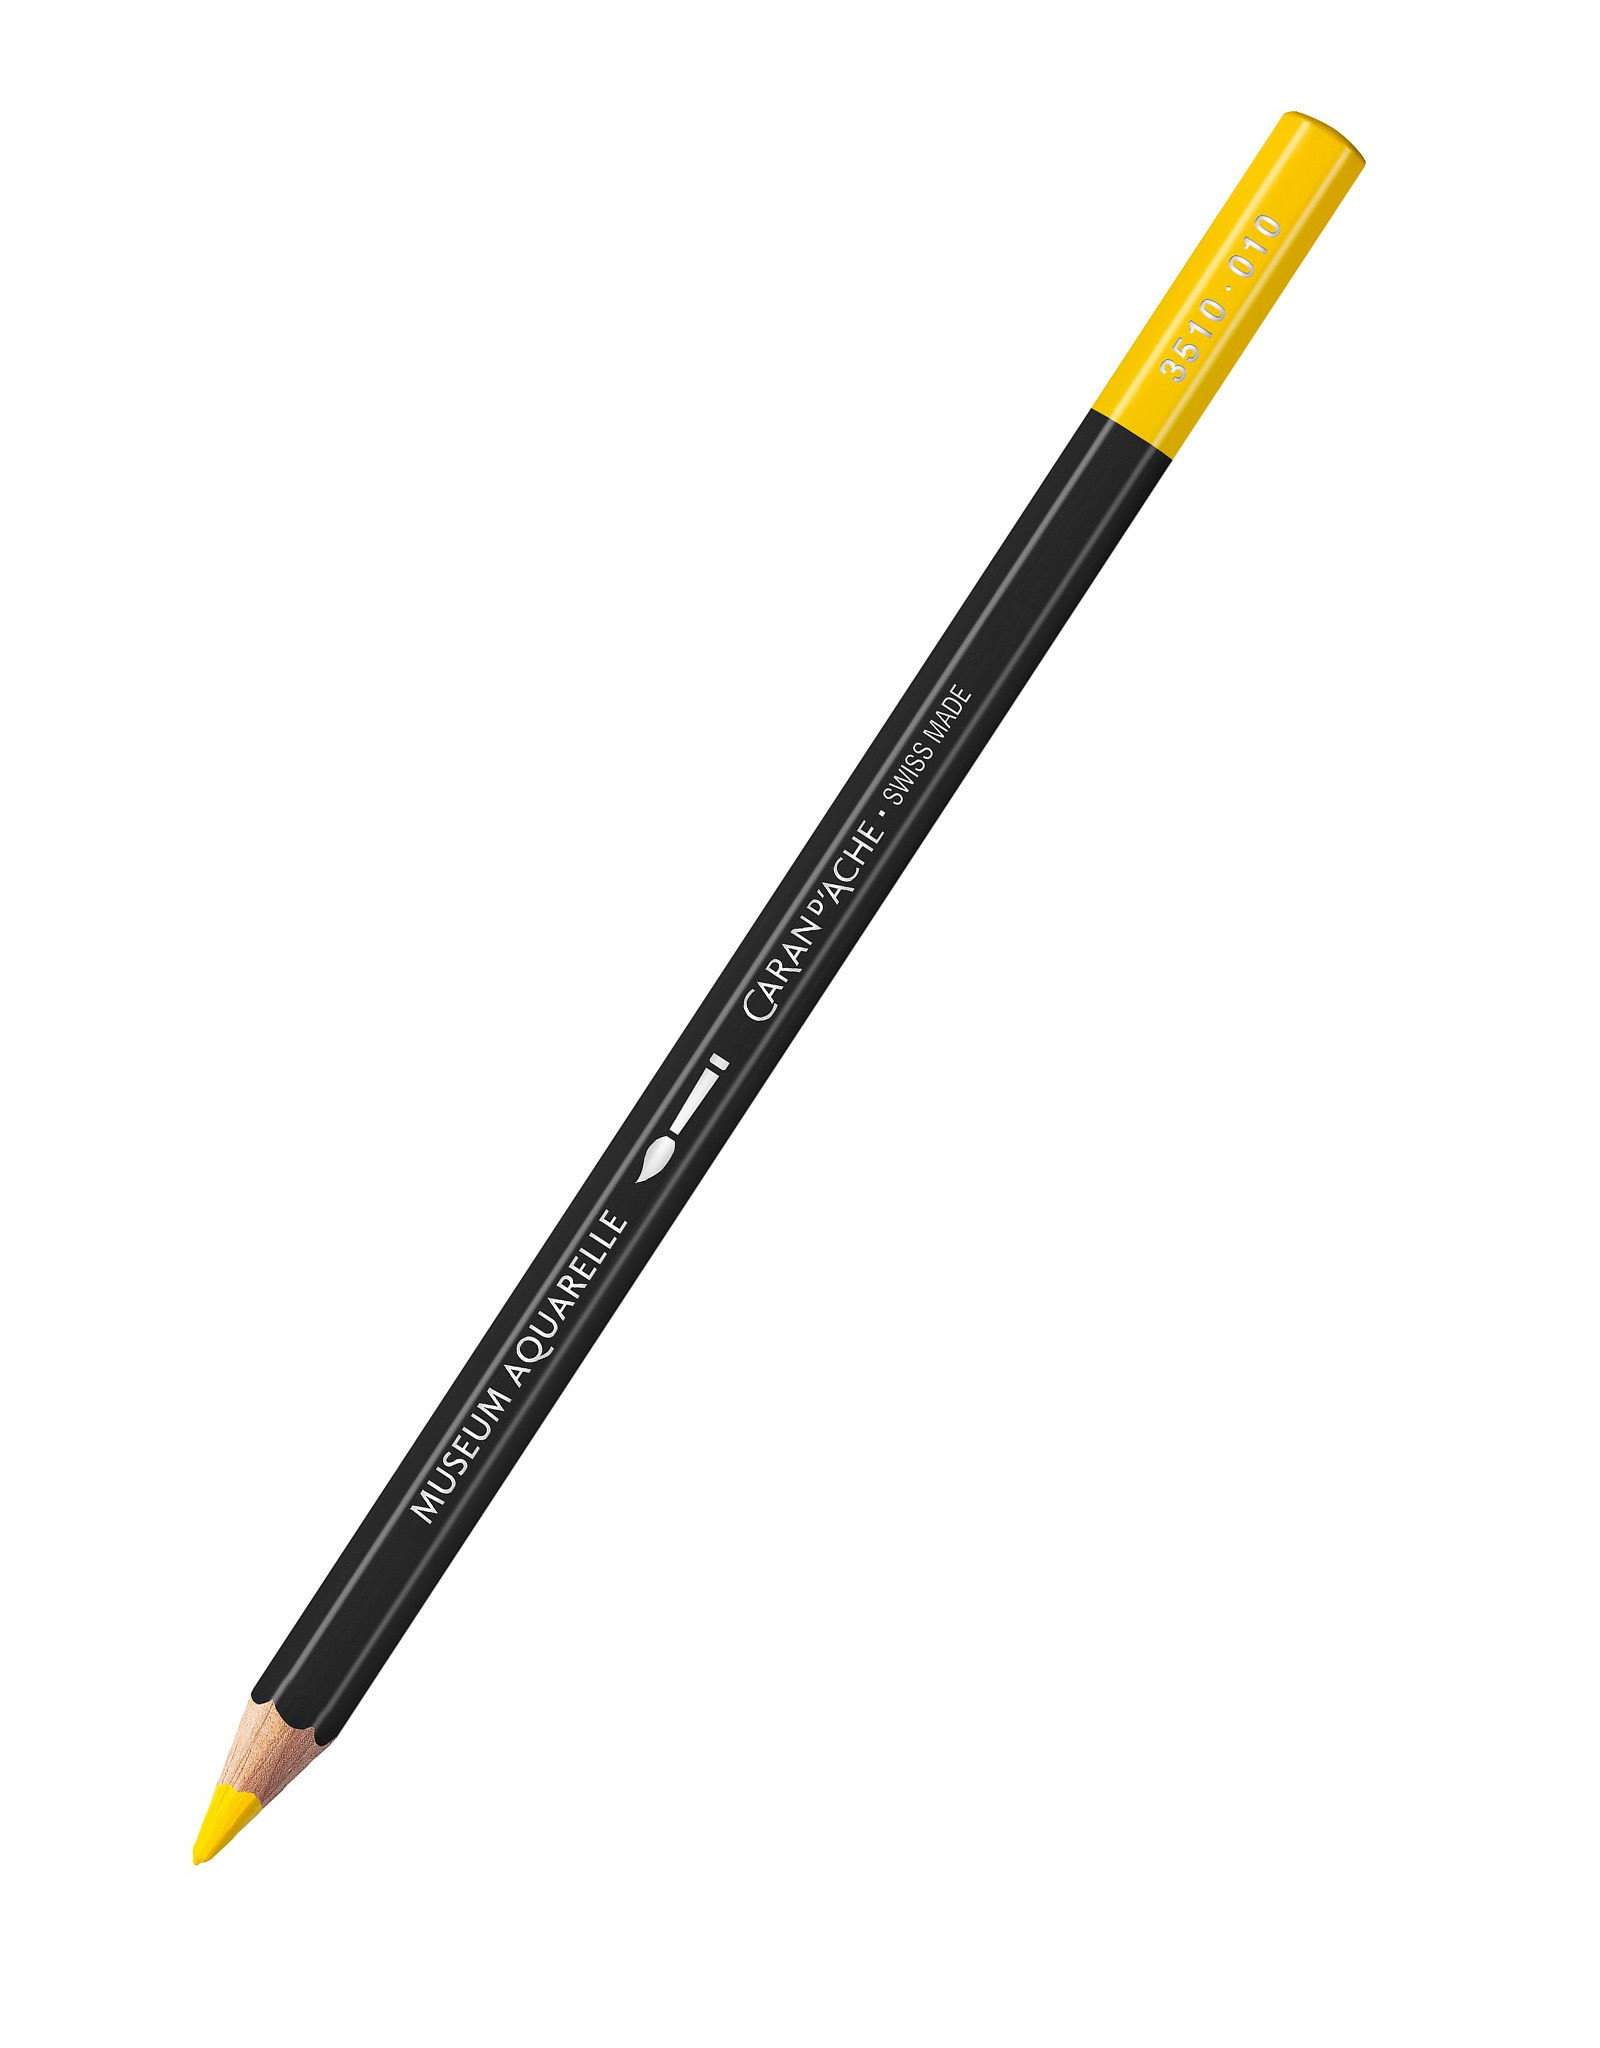 Caran d'Ache Caran D'Ache Museum Aquarelle Colored Pencils, Yellow